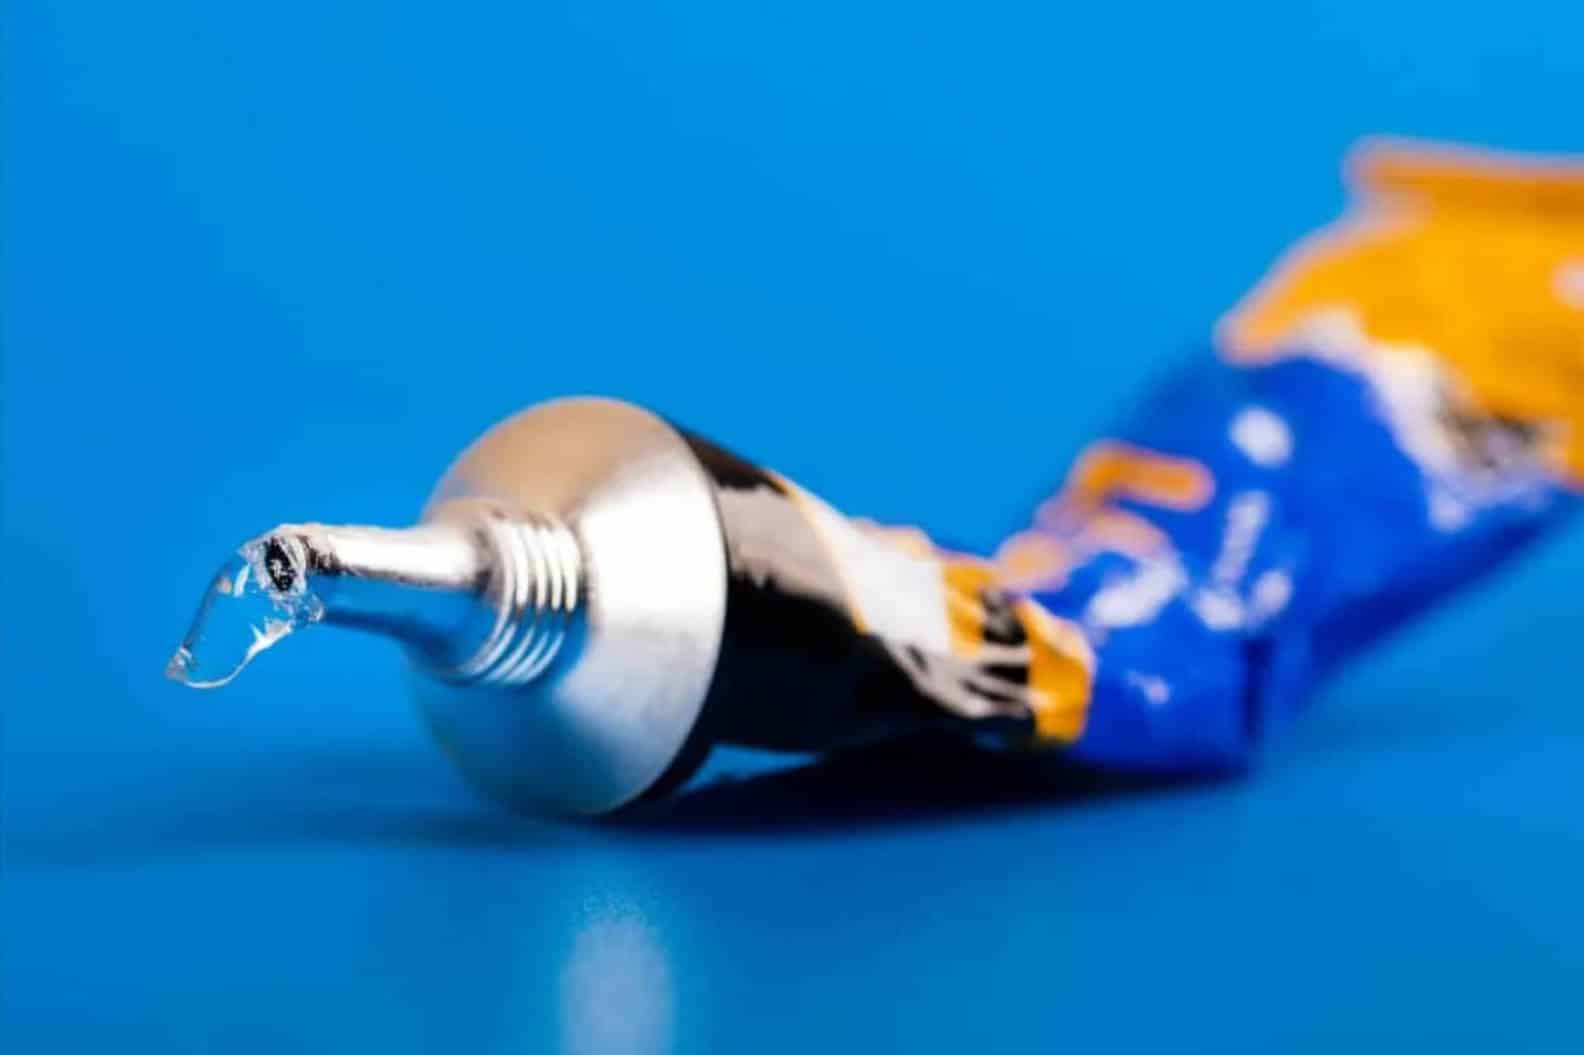 Glue For Your LED Light Strips